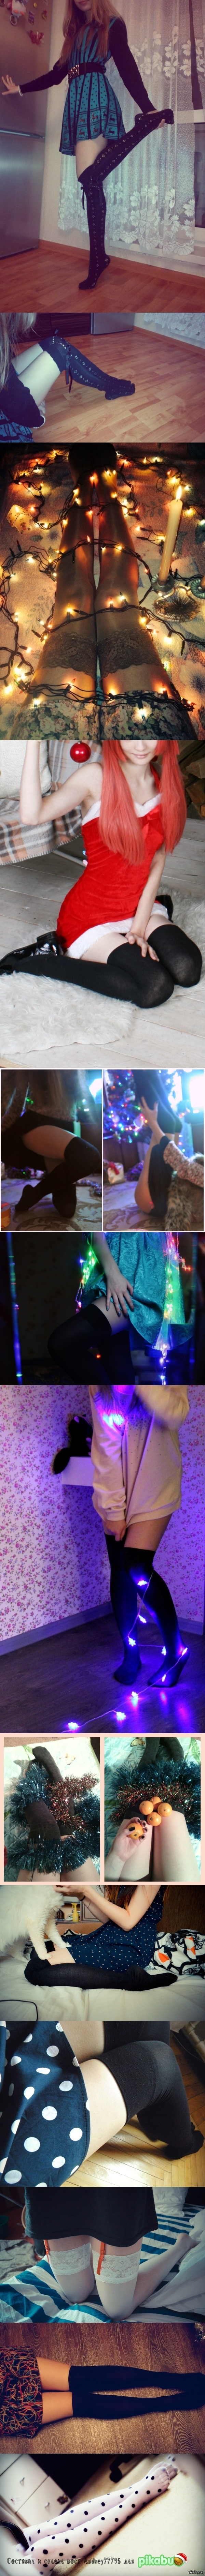 Christmas Feet Compilation (#4) - NSFW, Girls, Beautiful girl, Legs, Stockings, Christmas, New Year, Longpost